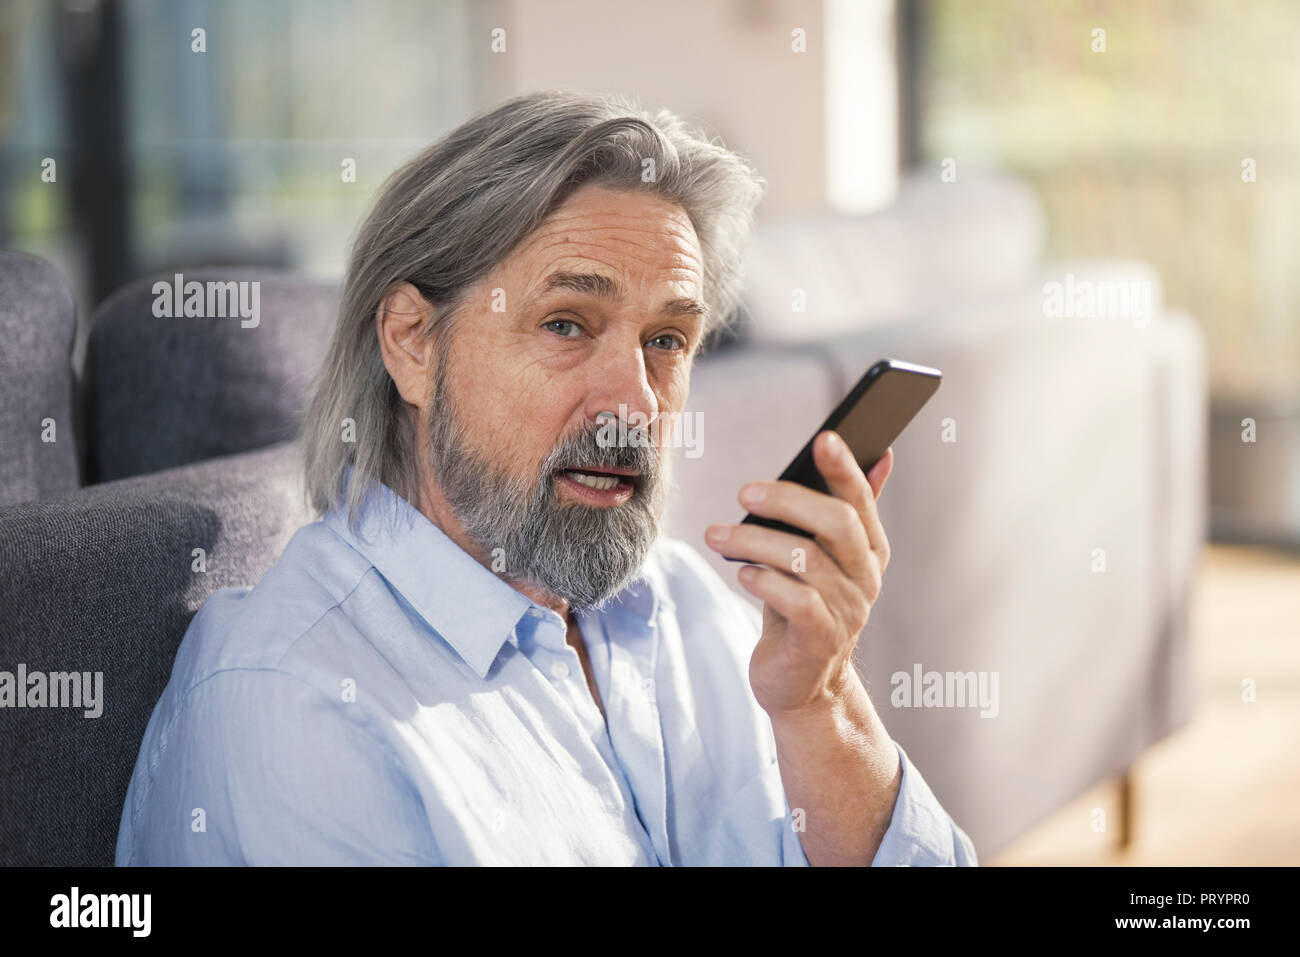 Senior man using smartphone Stock Photo